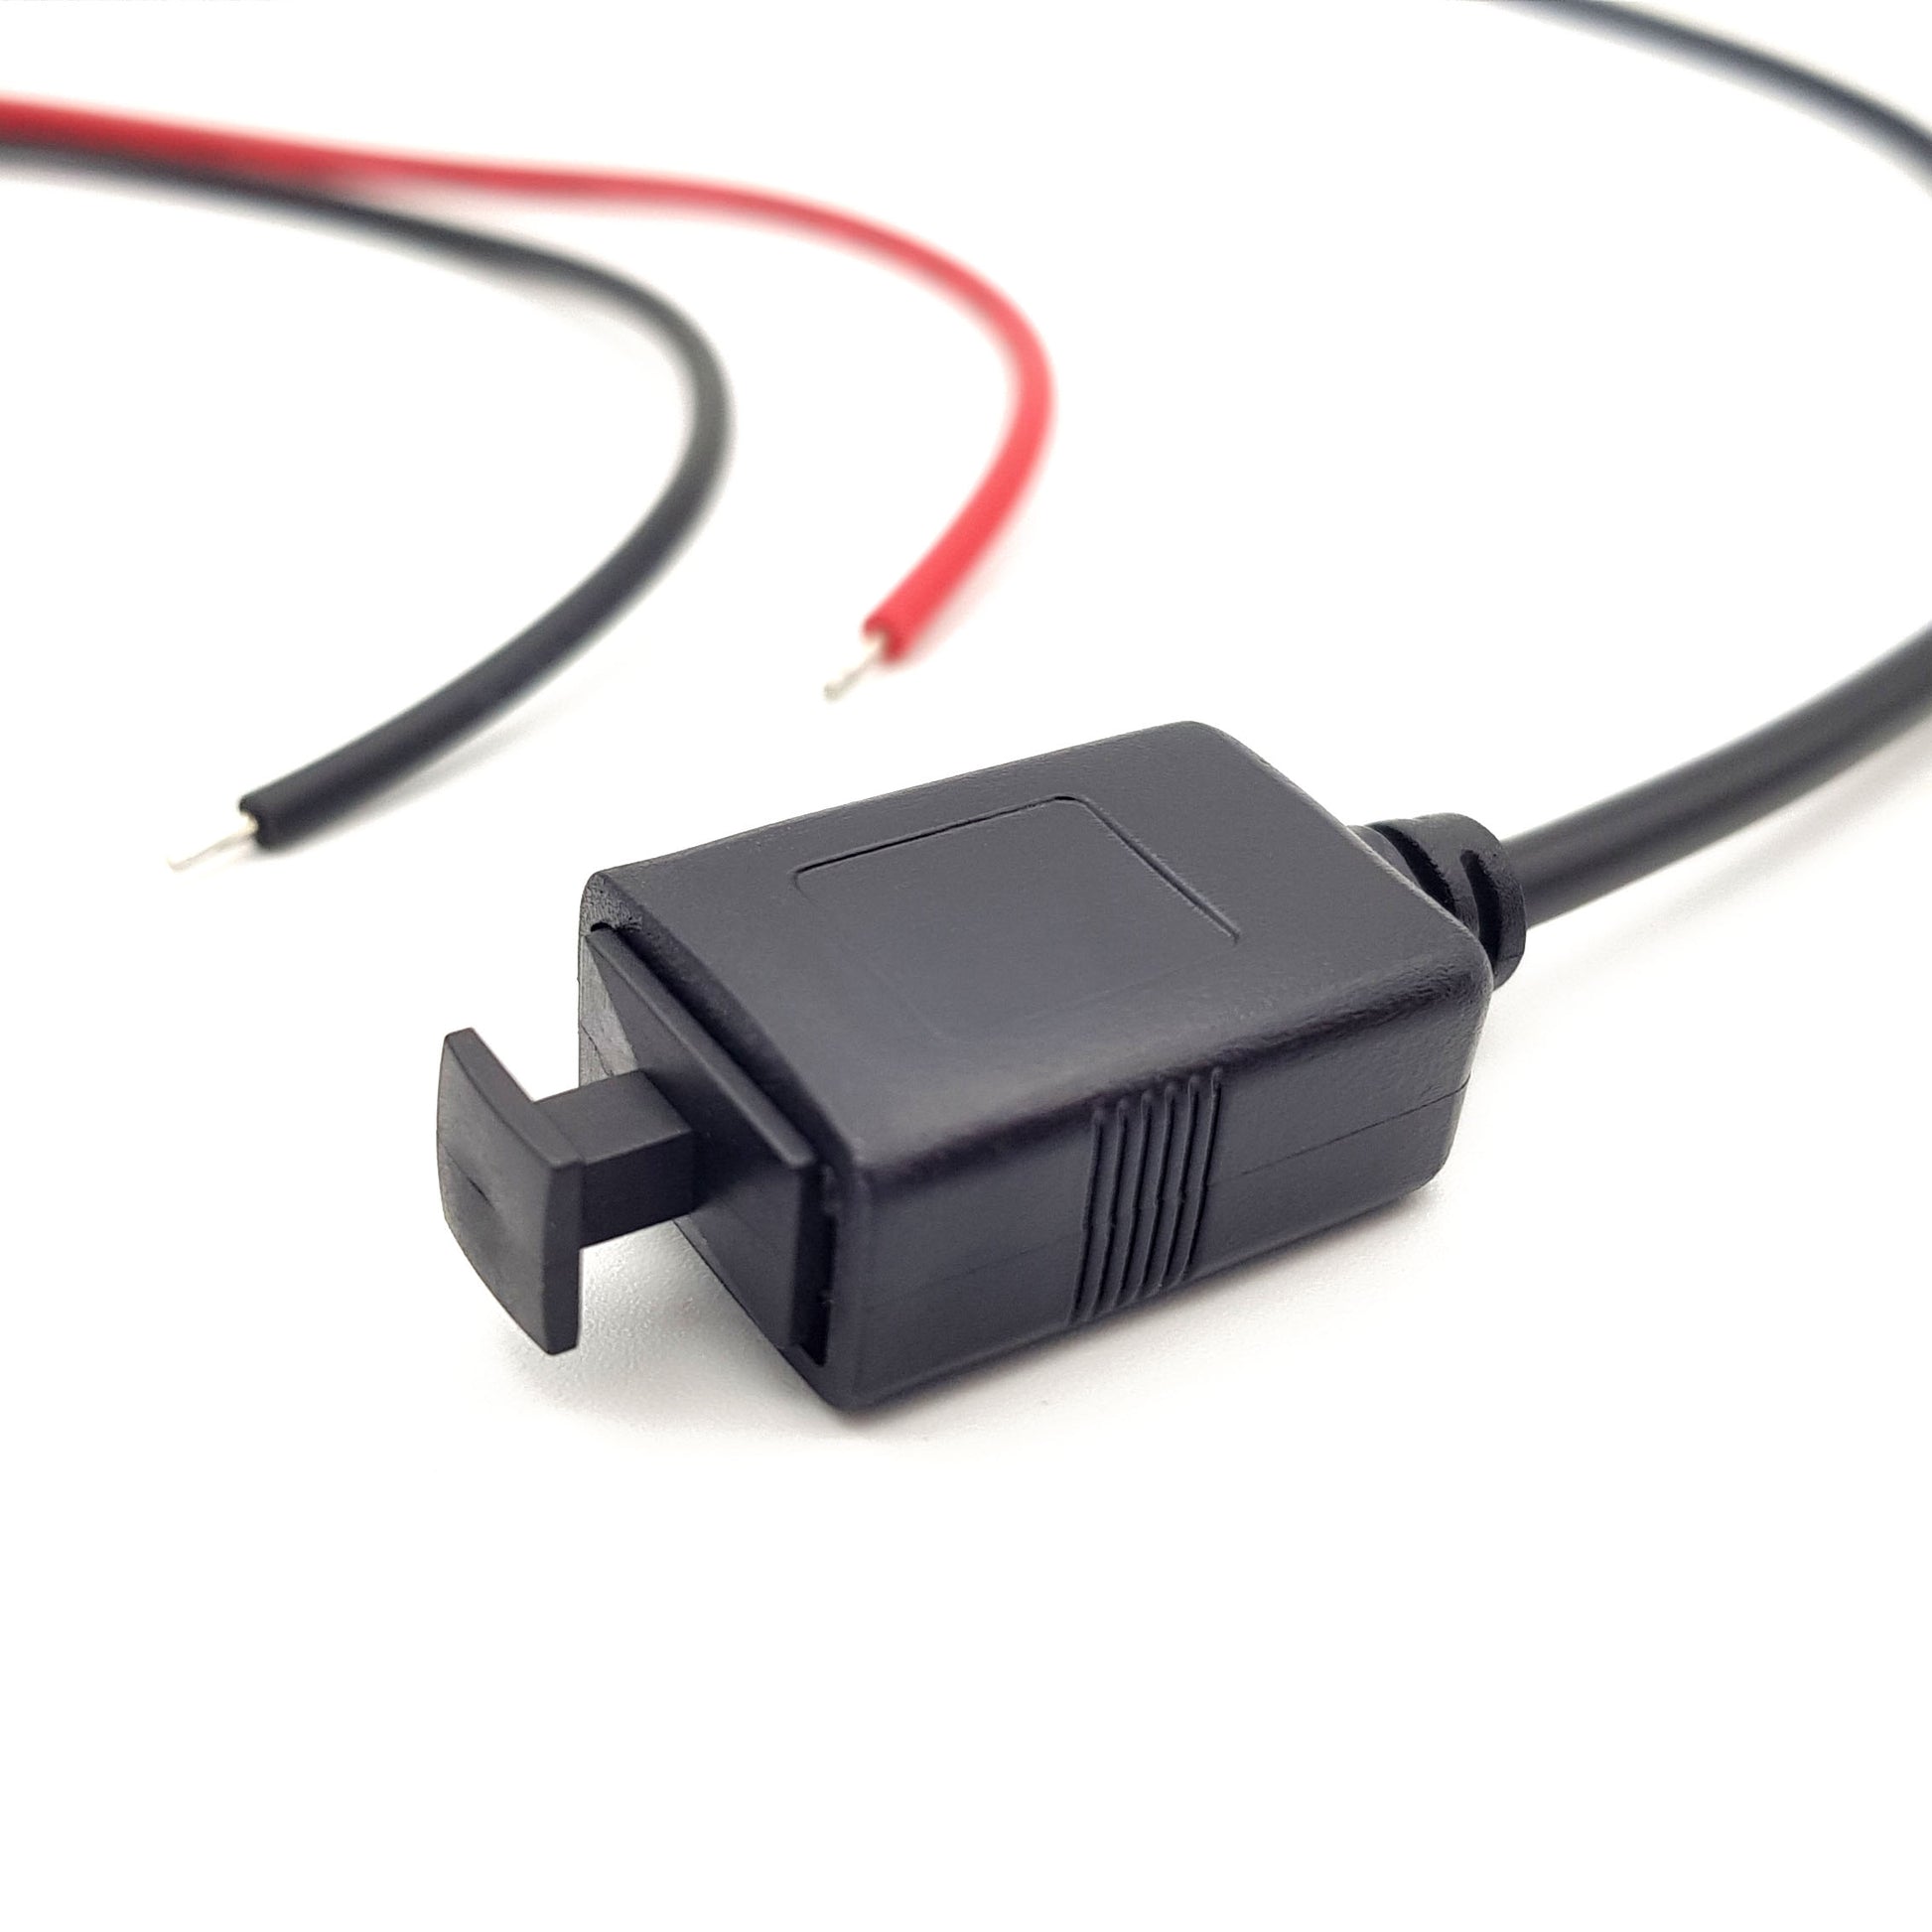 Motorrad Ladegerät 2 USB-Anschlüsse Stecker Adapter Quick Charge